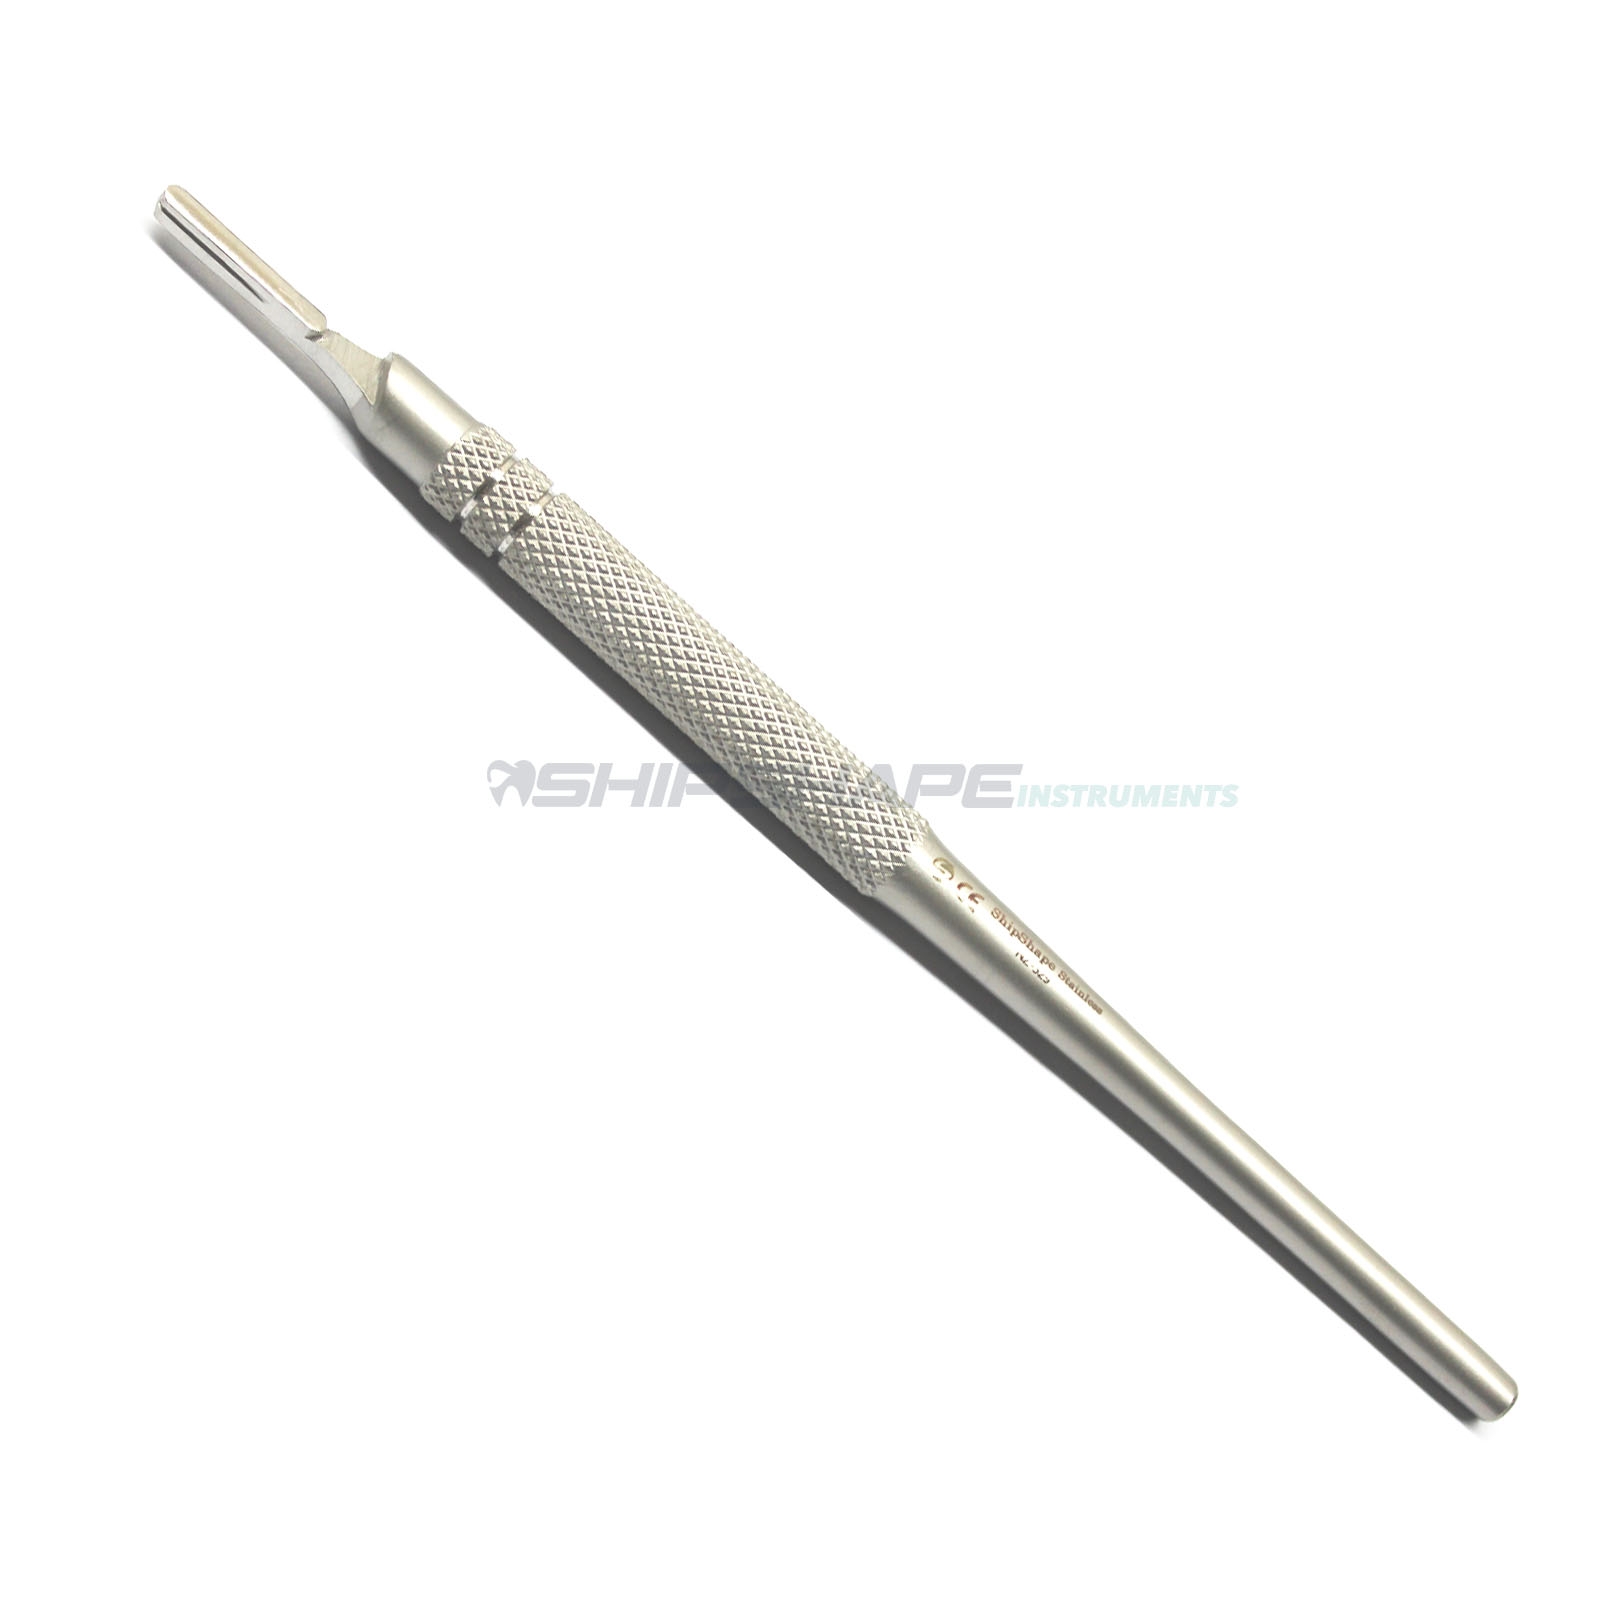 Scalpel Handle for 10, 12, 15, 15c Blades Scalpel Handles Dental Surgical Instruments-0